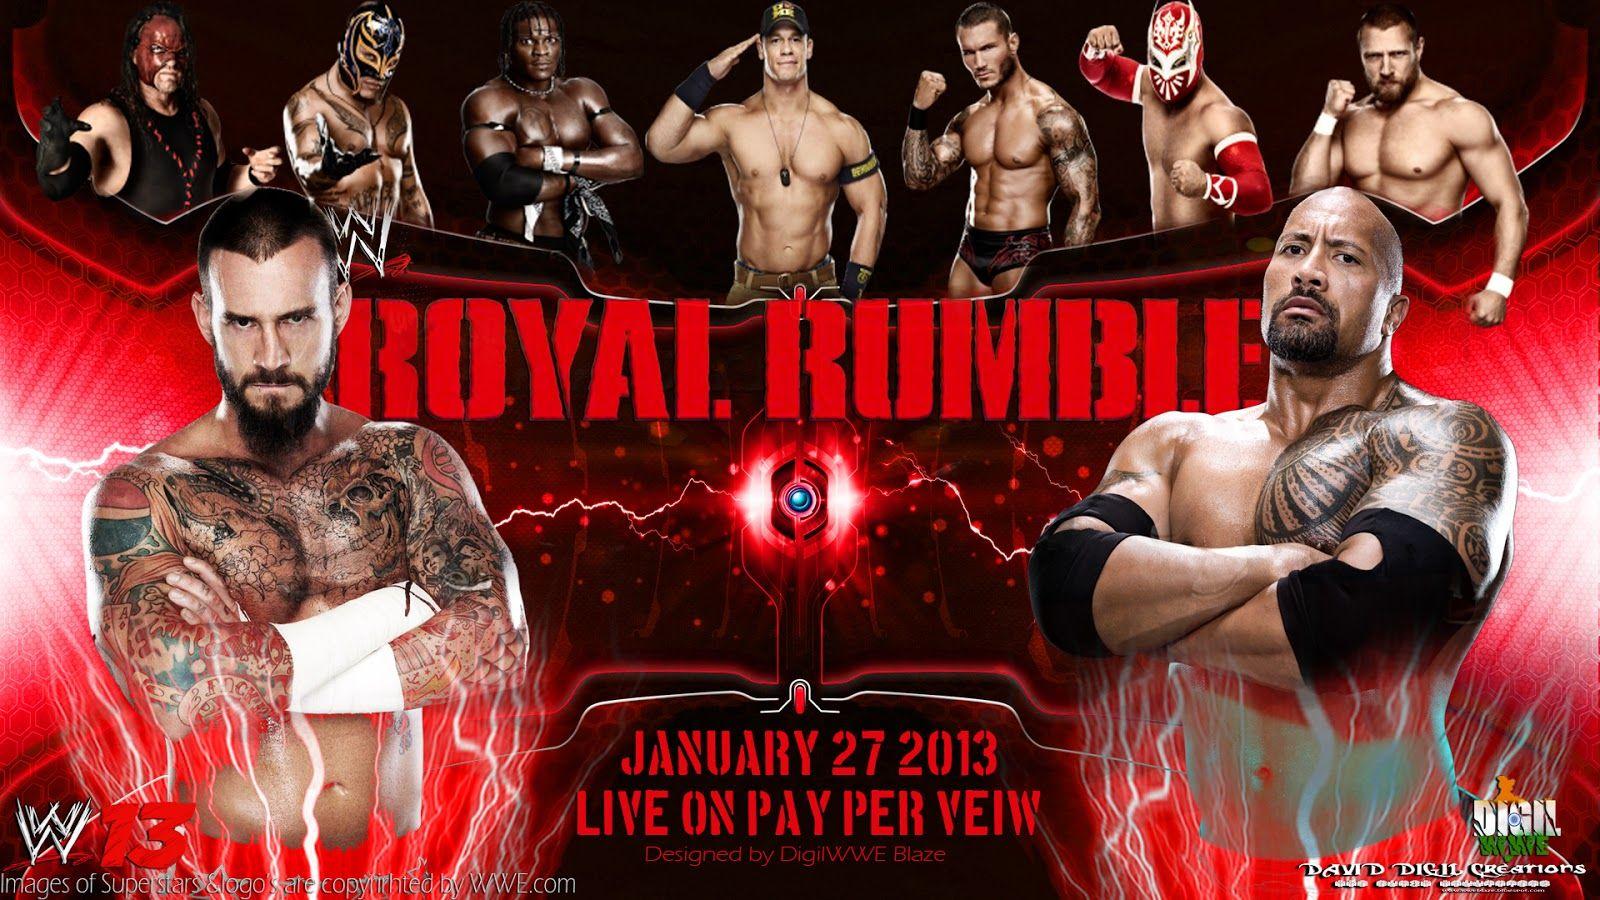 Royal Rumble 2013 Predictions Guessing the Royal Rumble Match's